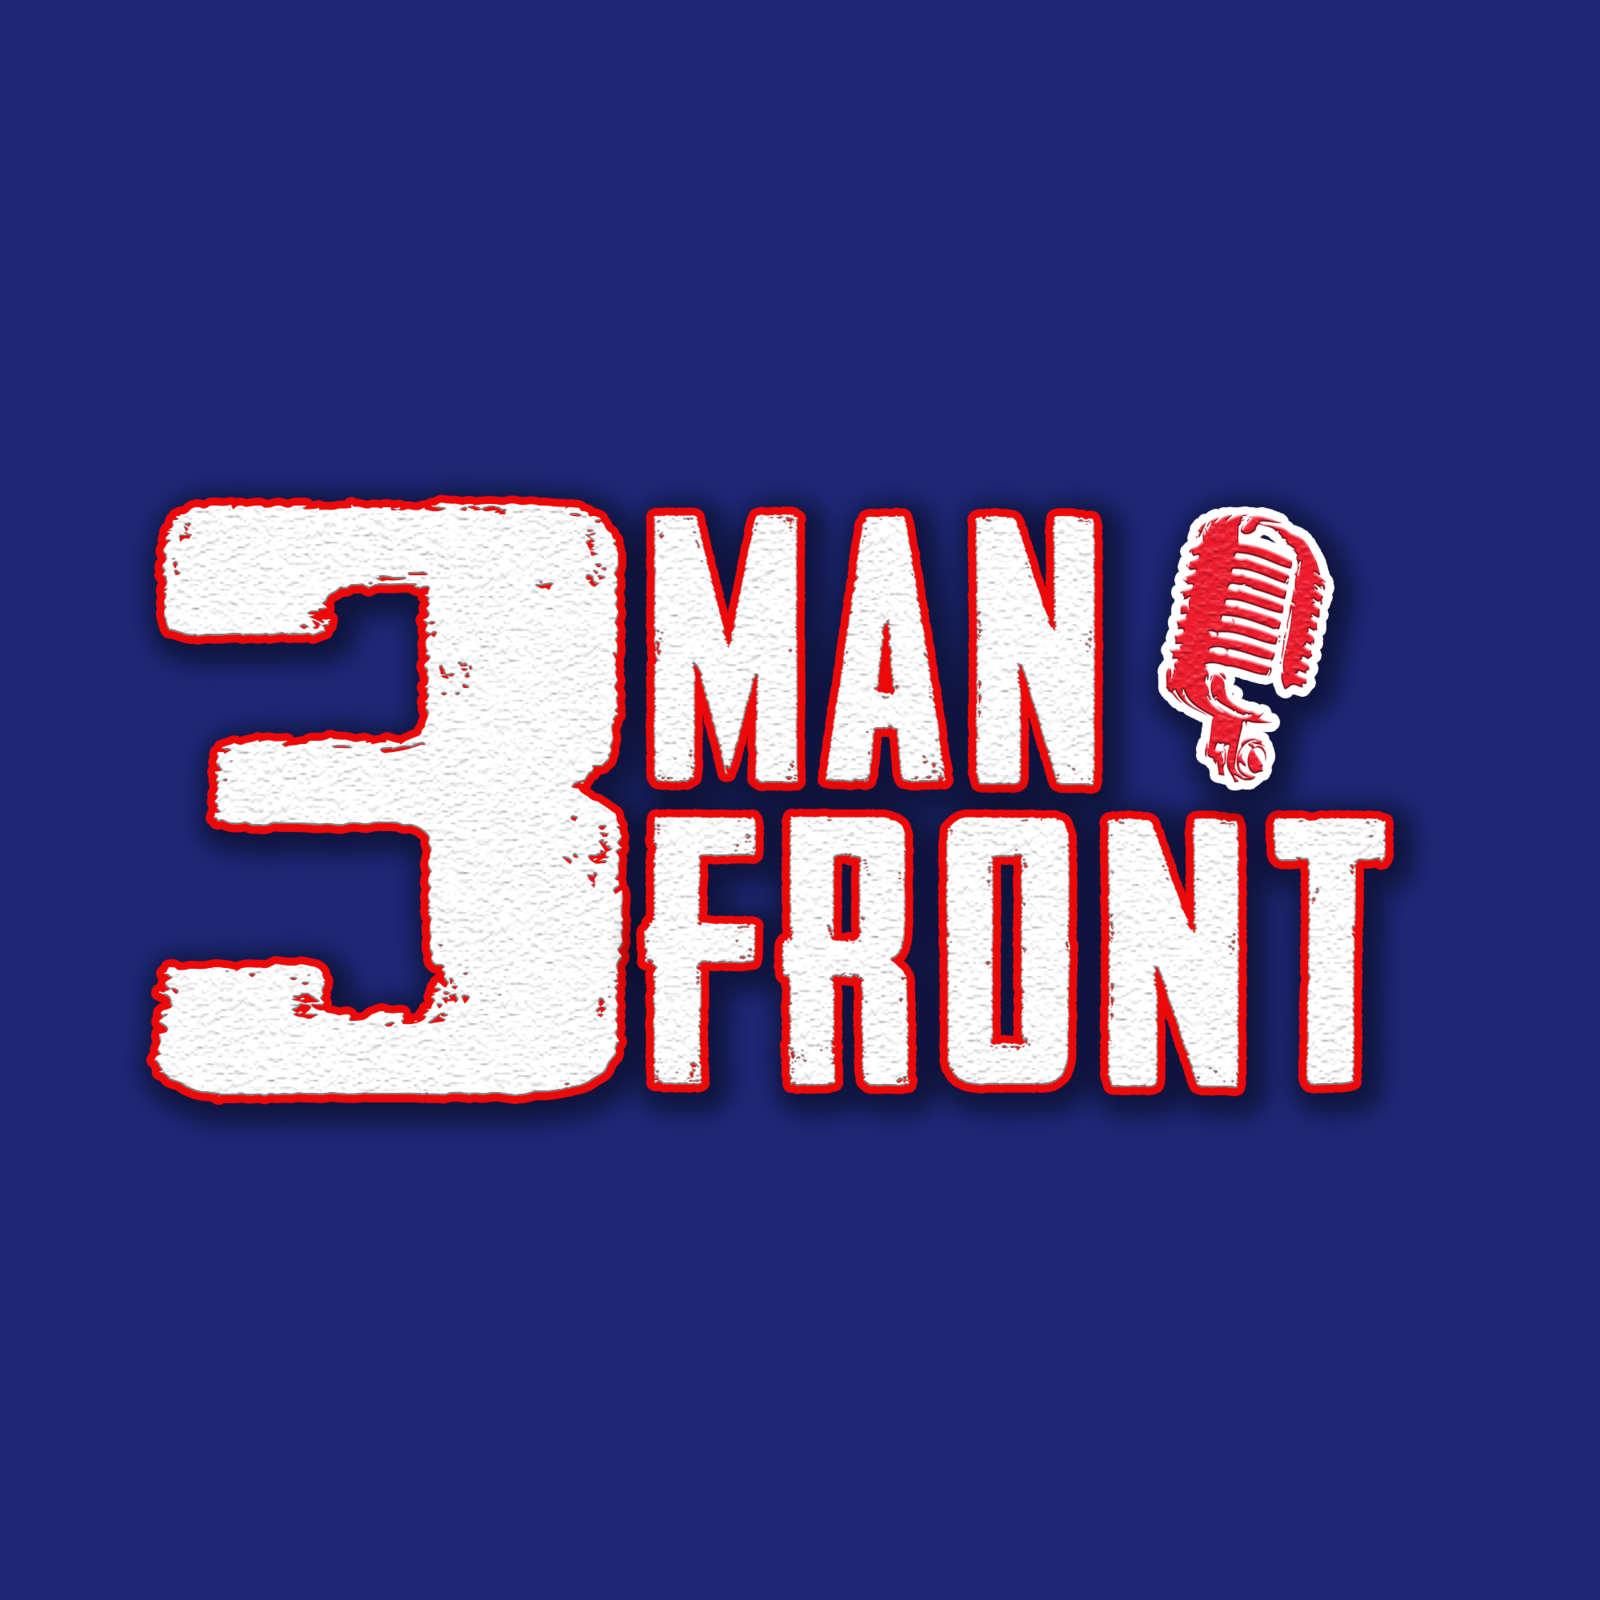 6-19-24 3 Man Front Hour 2: Skip Holtz at Social Taco & best MLB player debate